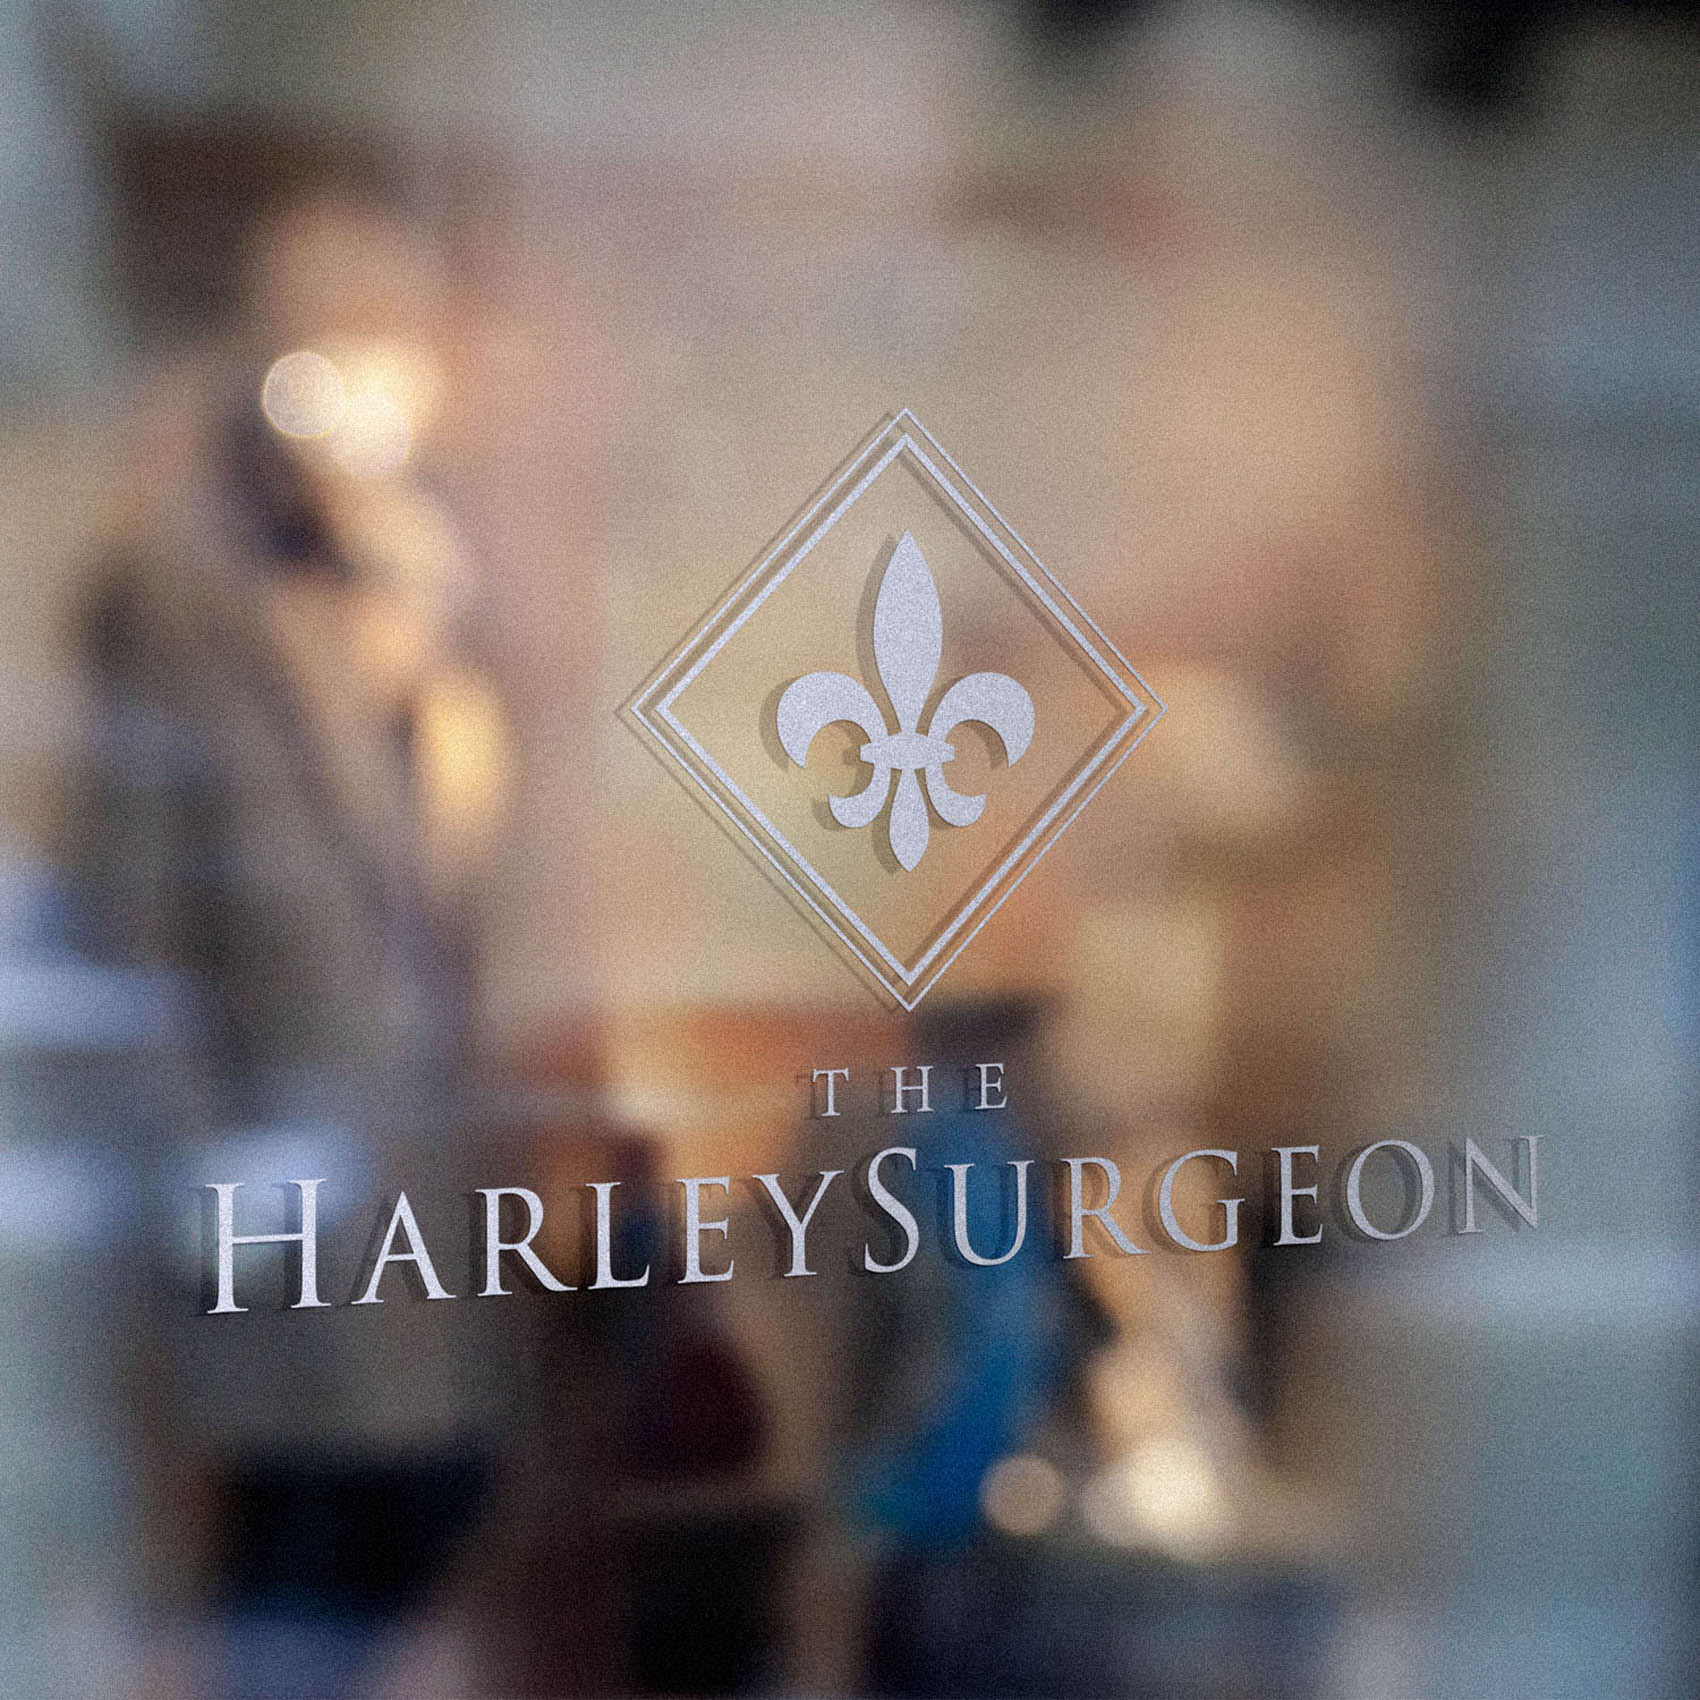 The Harley Surgeon - Luxury High End brand identity logo design london9